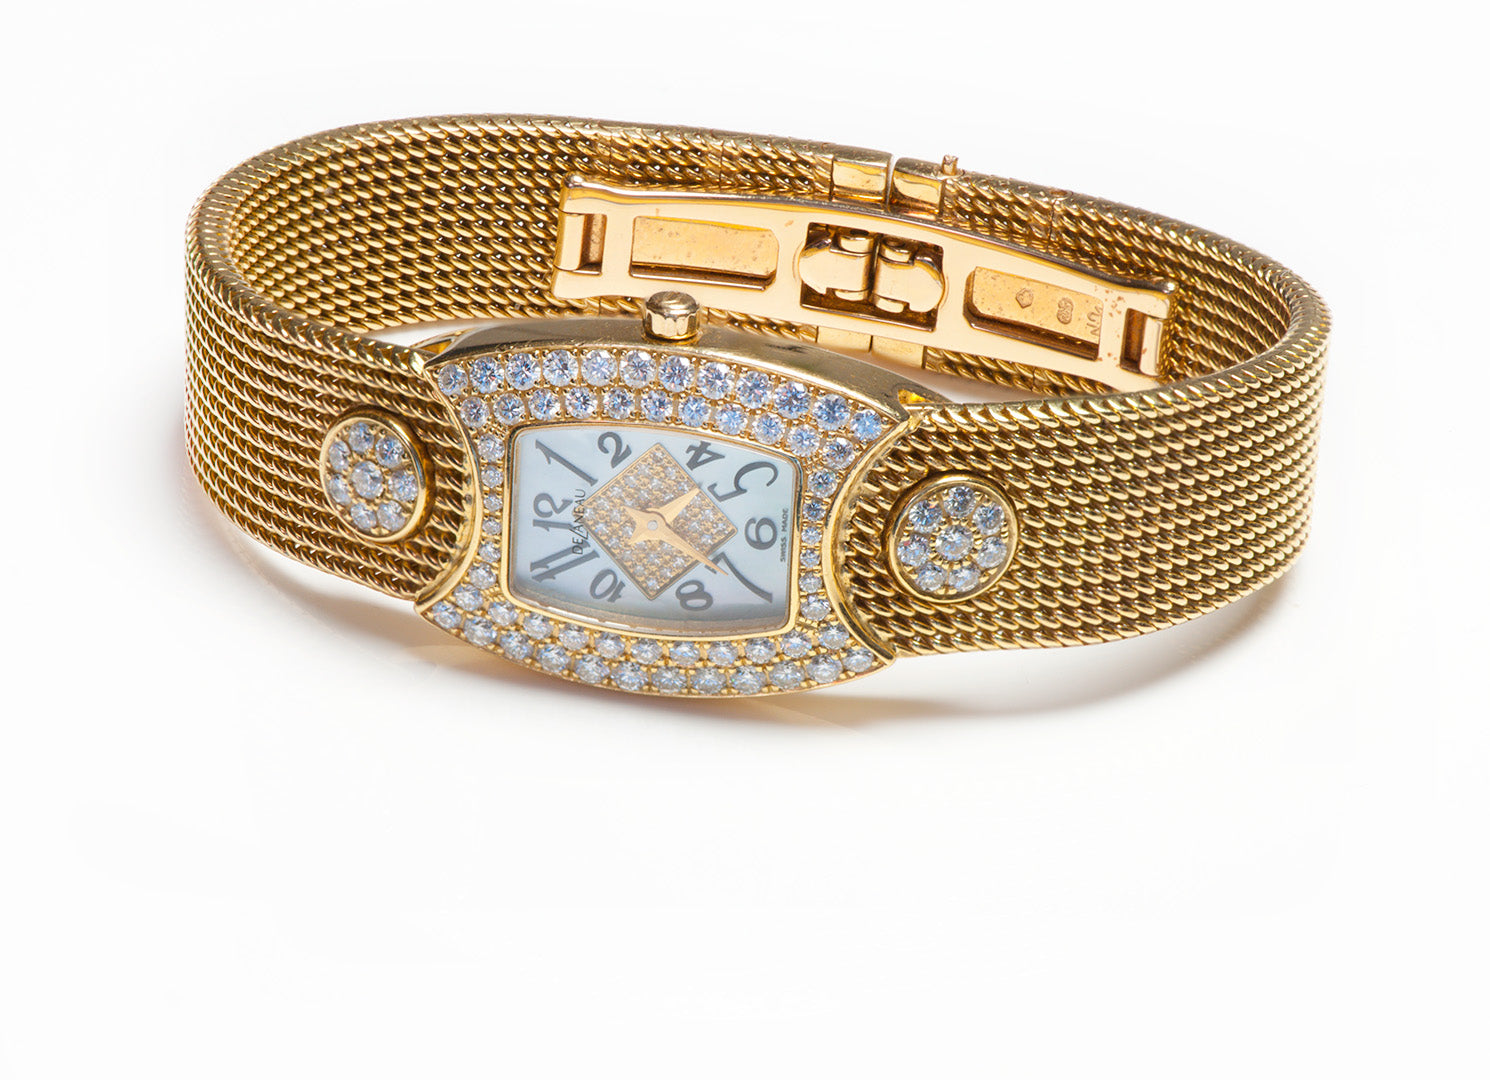 delaneau-first-lady-18k-gold-diamond-ladies-watch